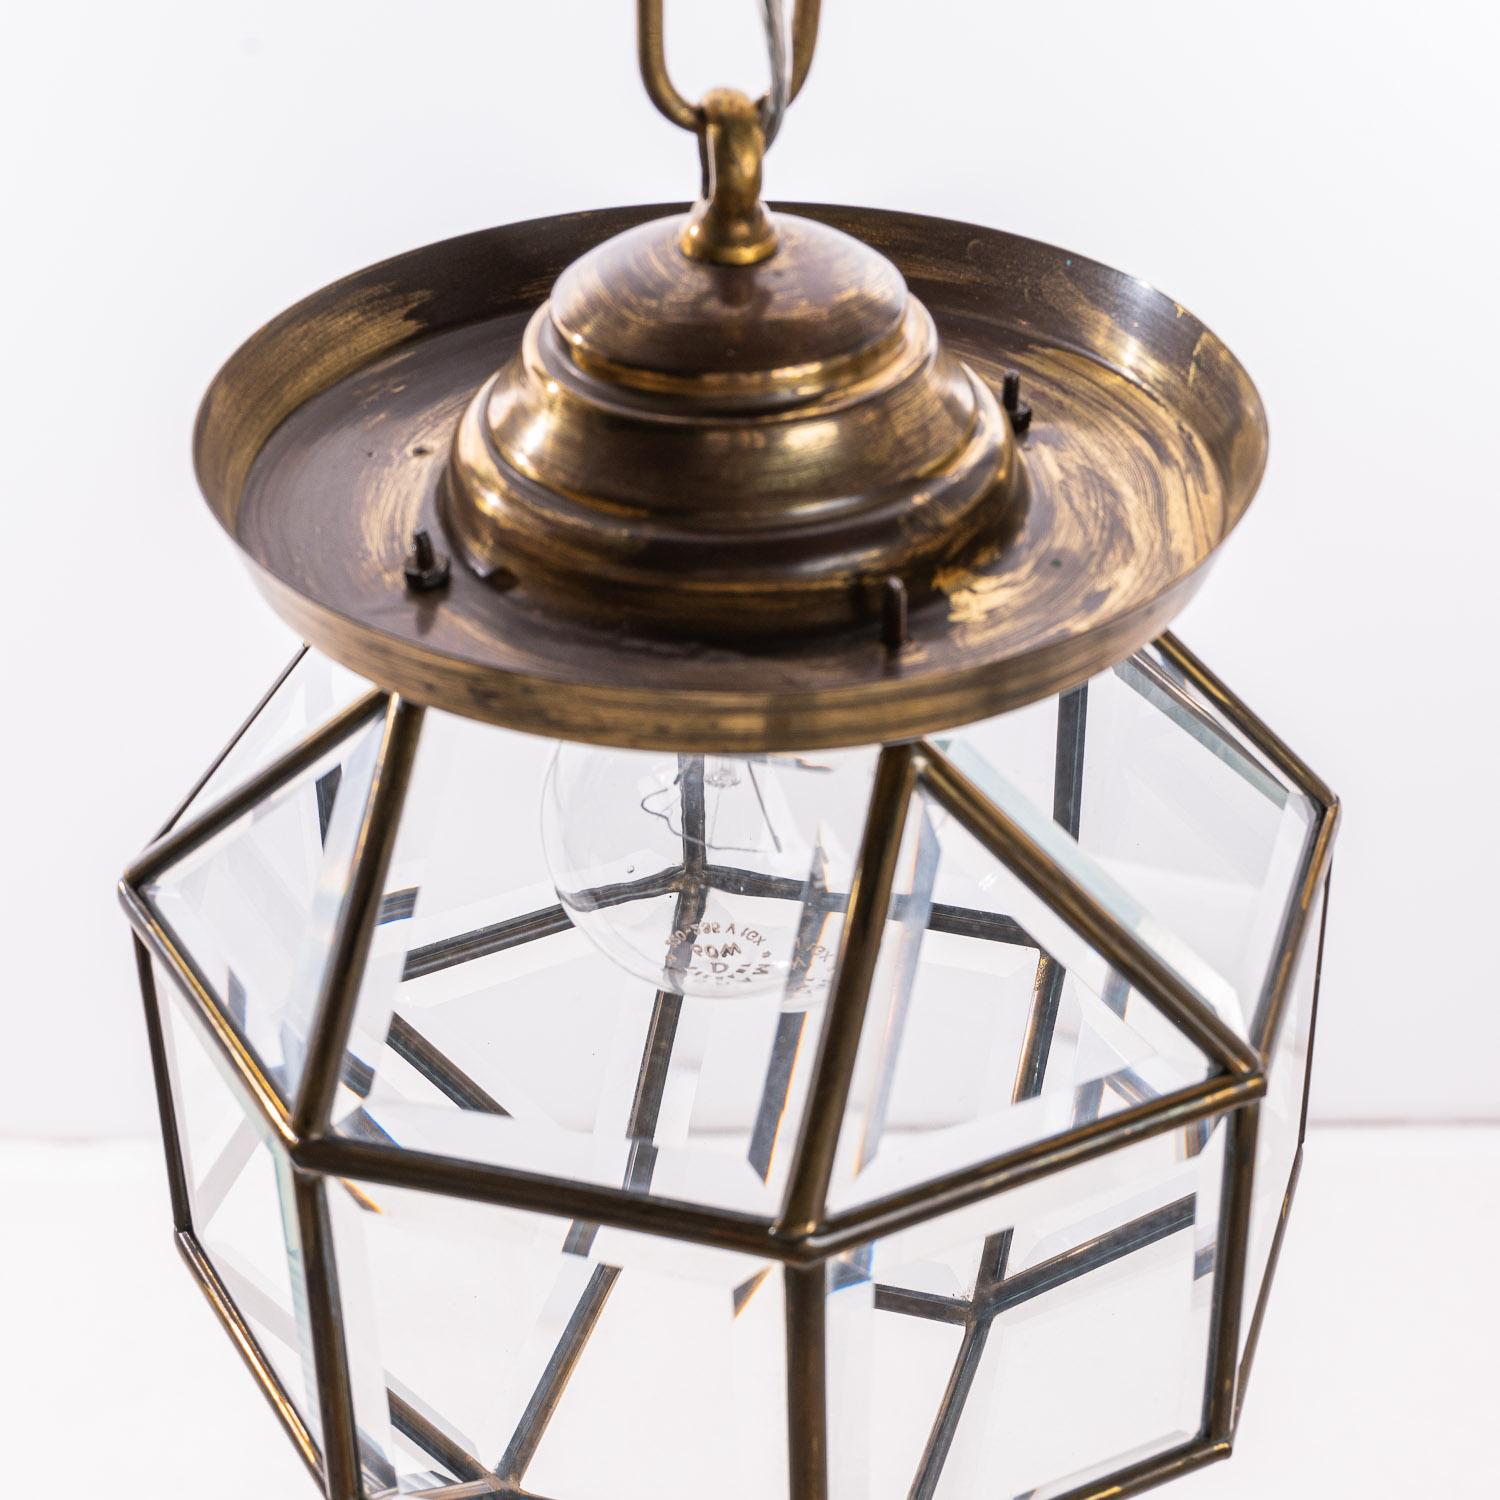 1900-1920 Brass & Glass Amsterdam School Lantern For Sale 5